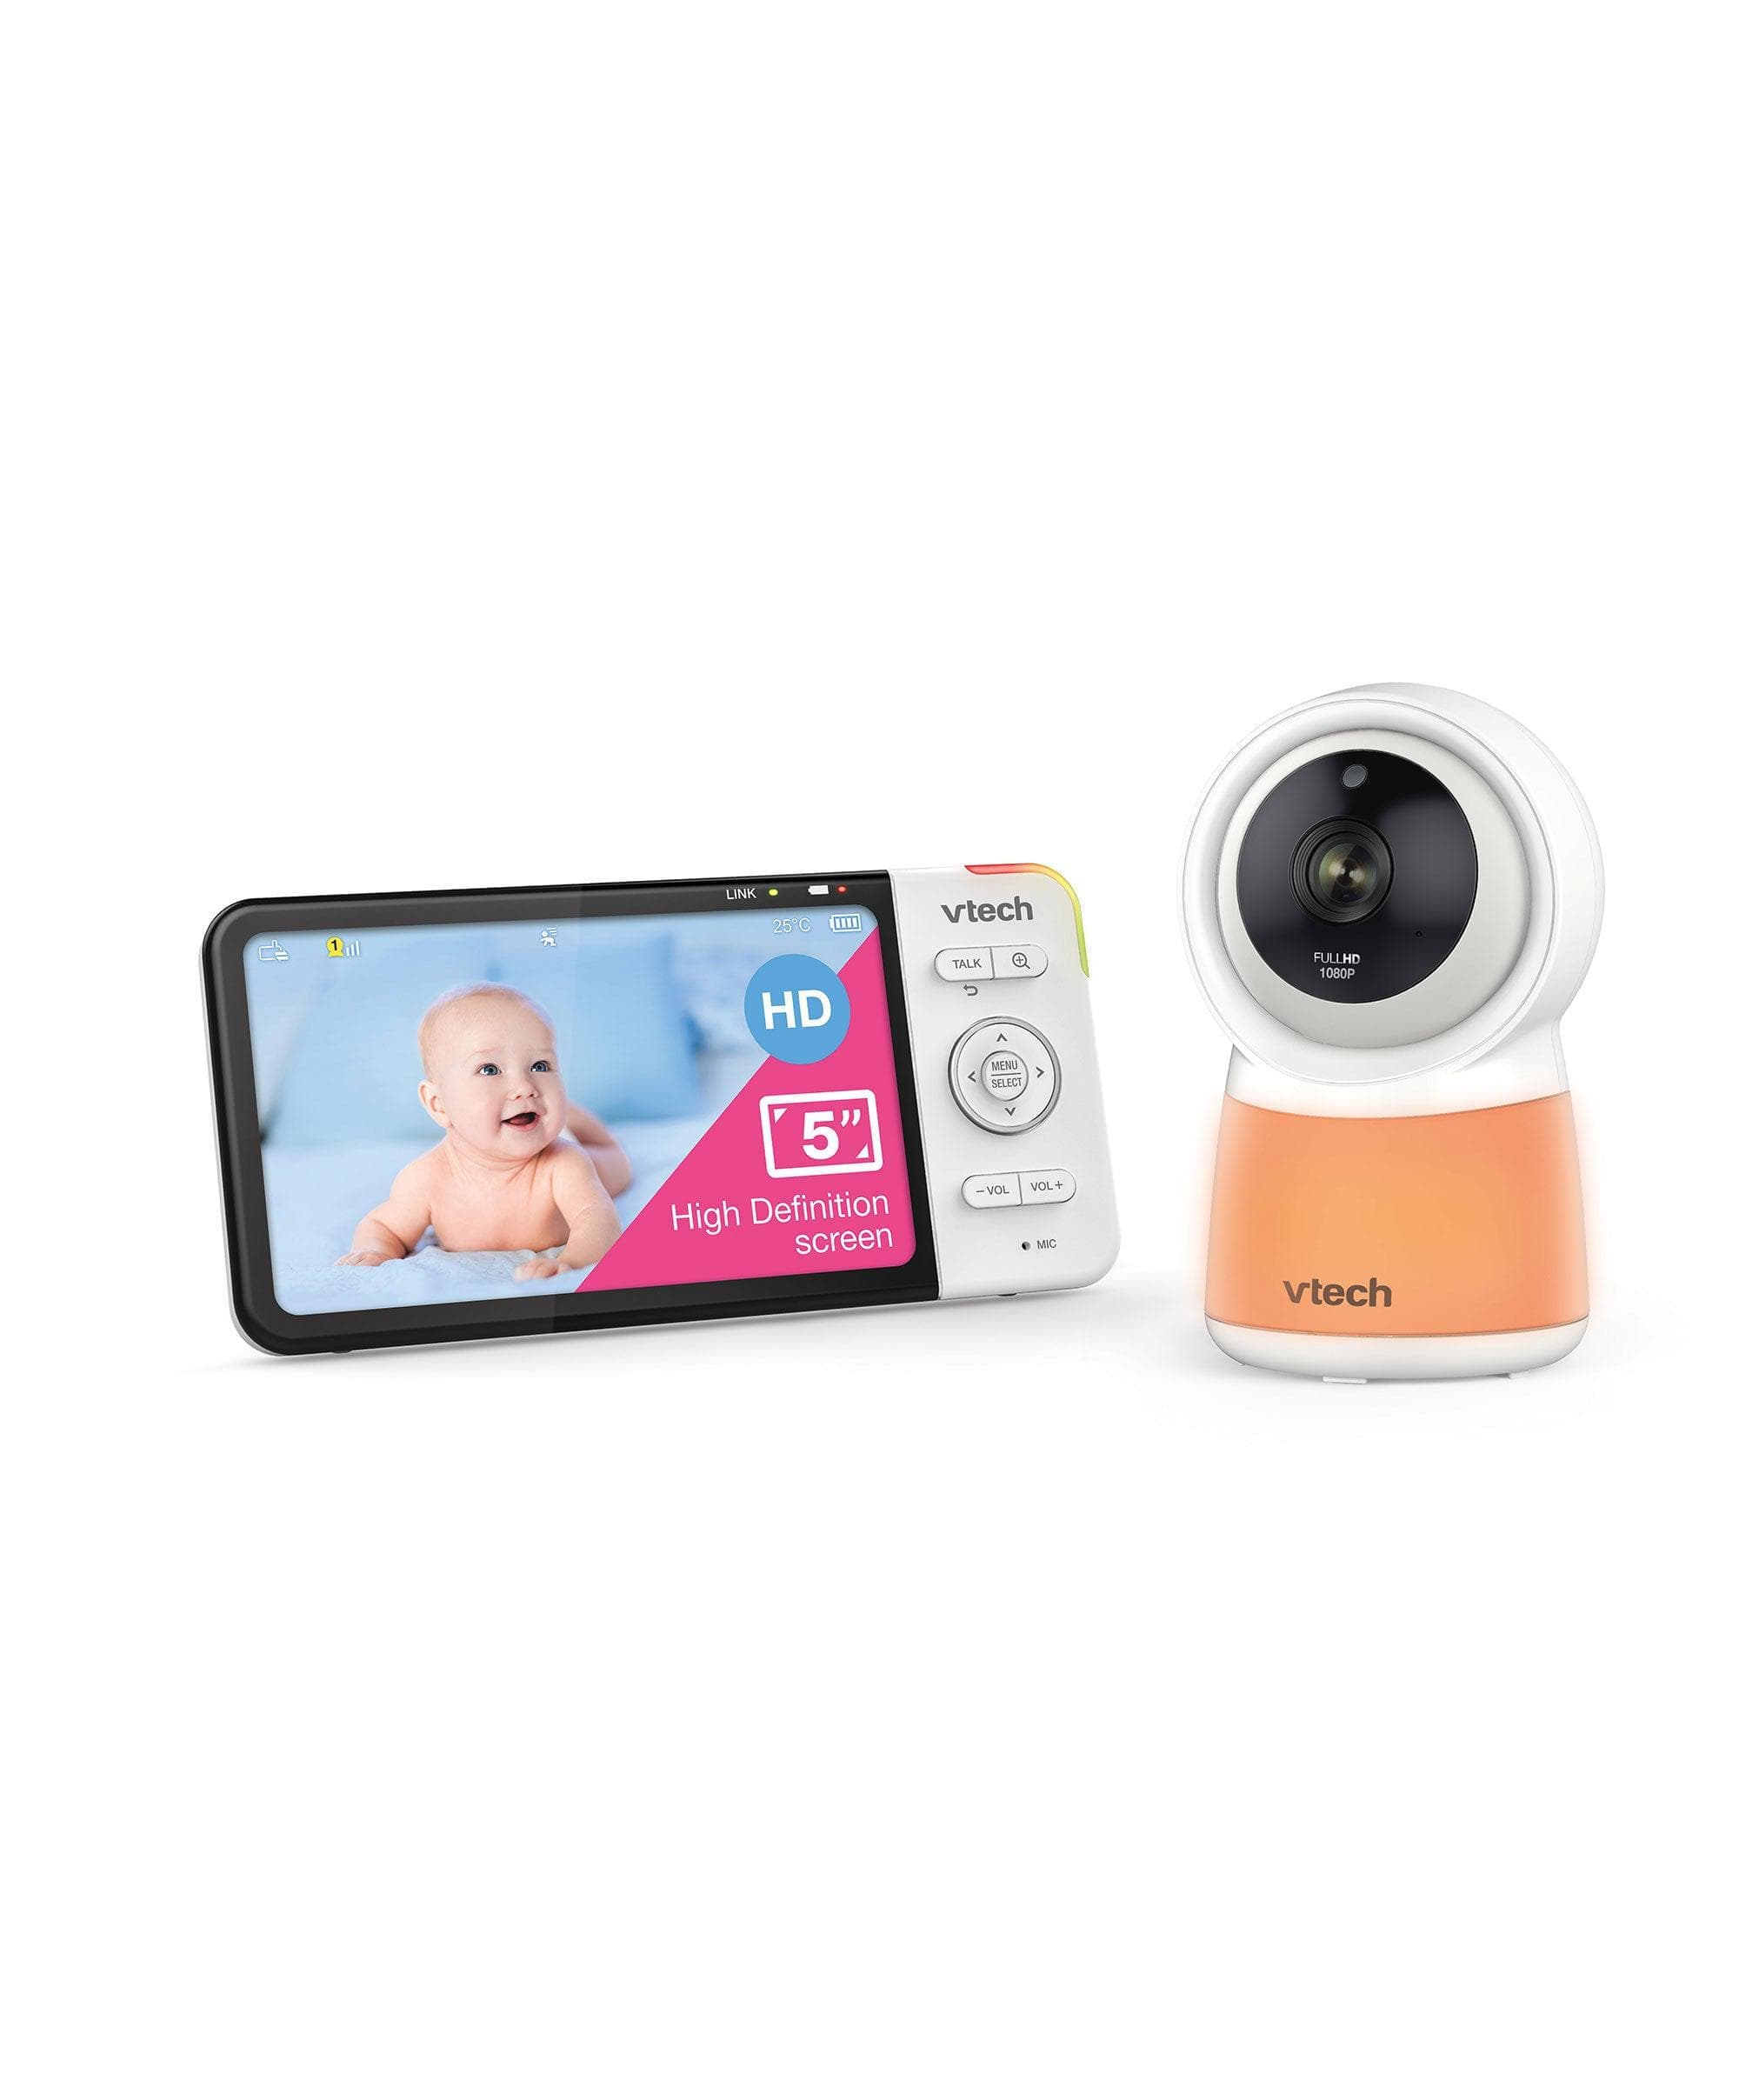 VTech RM5754HD Smart Video Baby Monitor - White